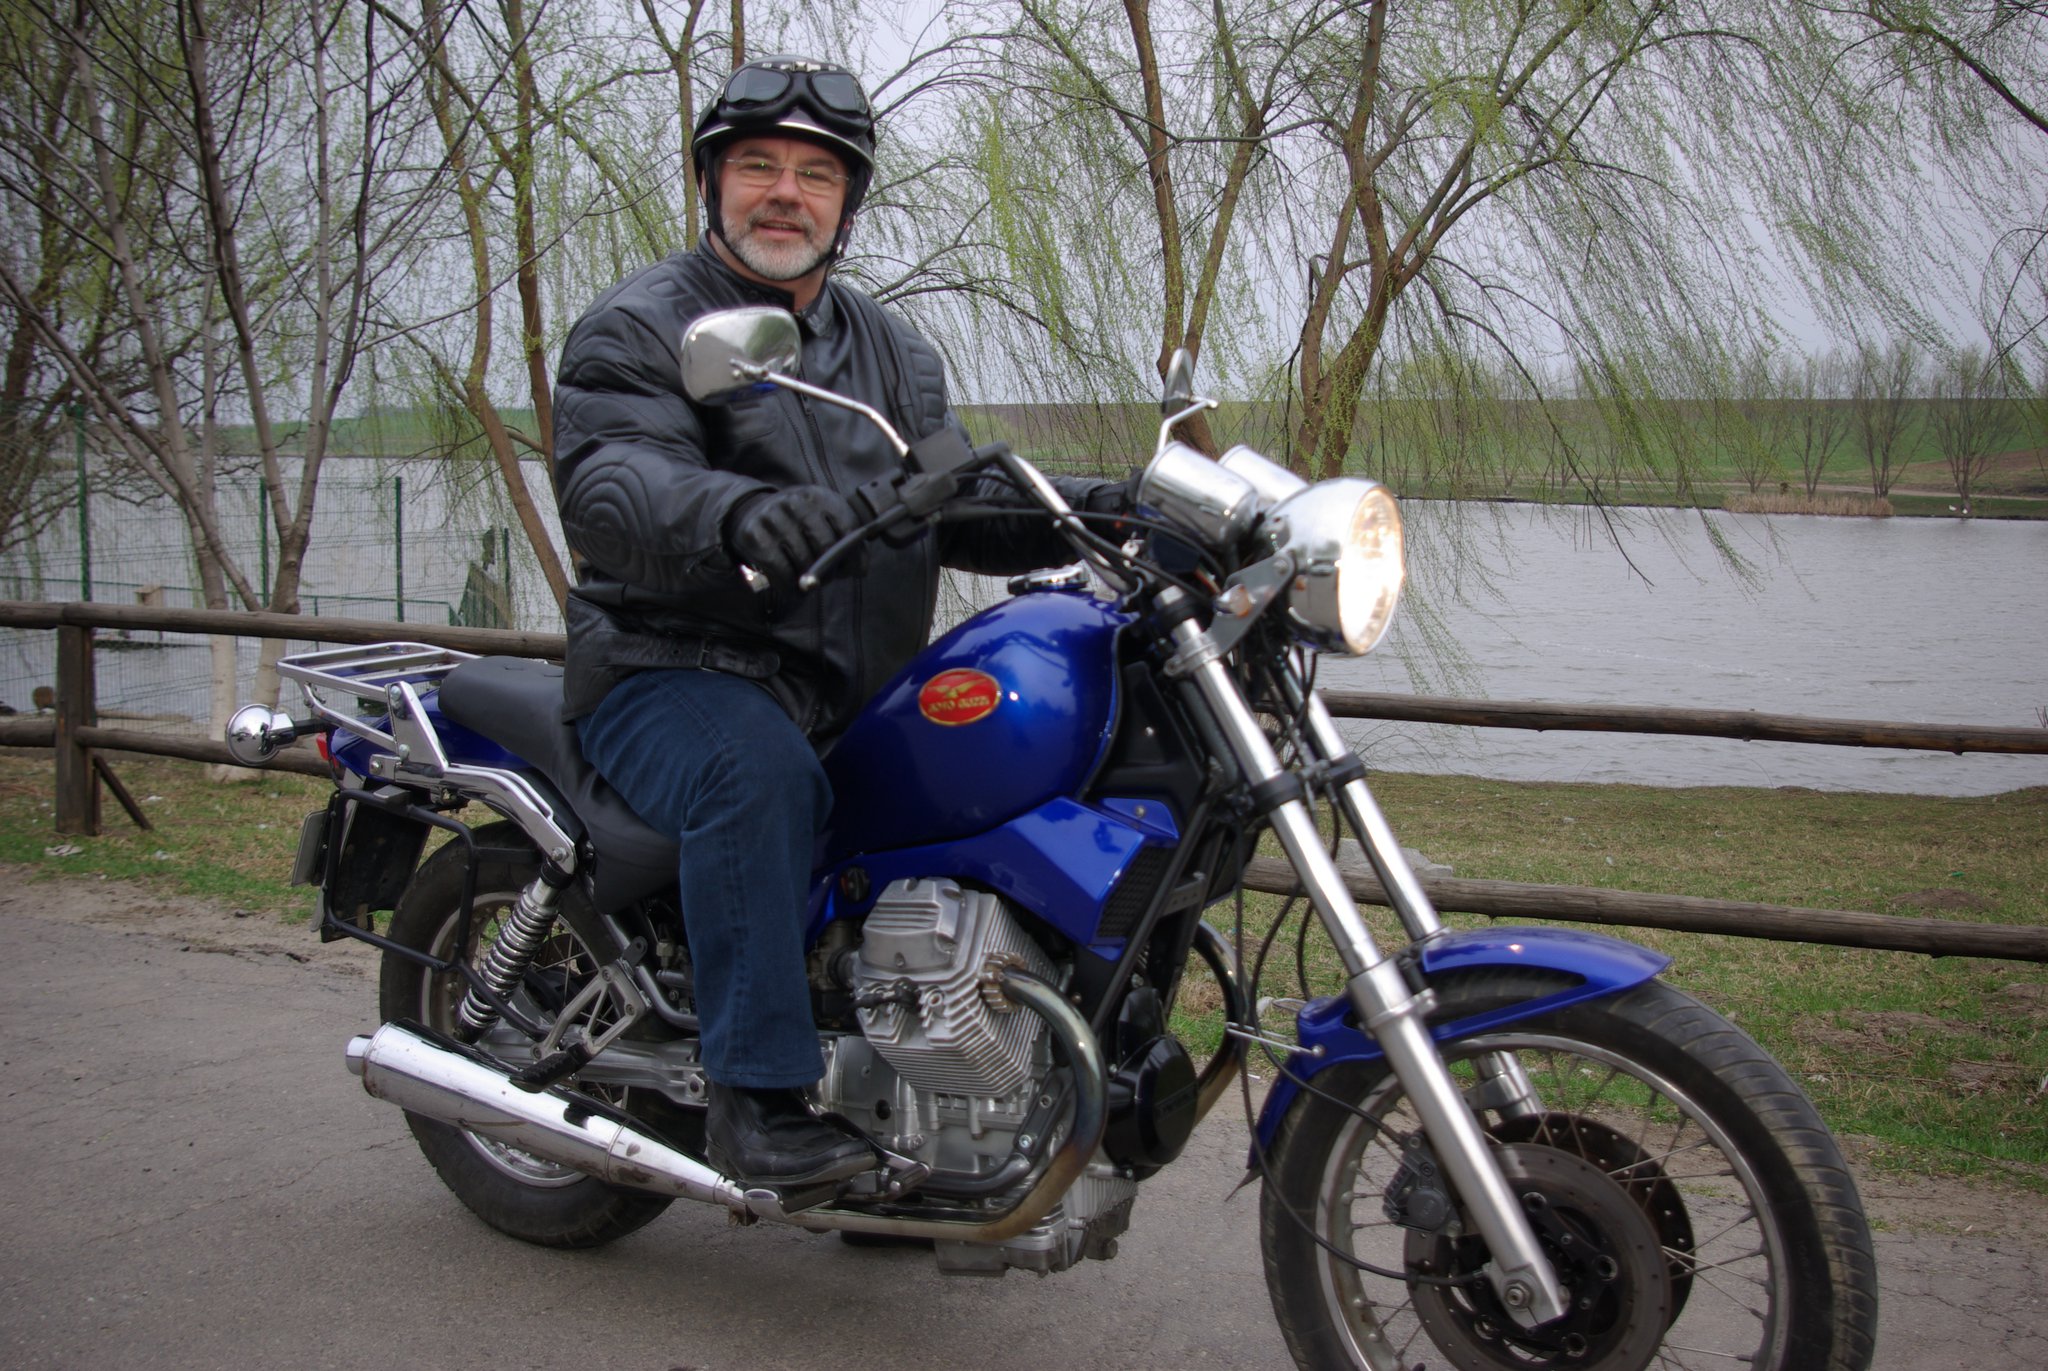 In '96 candida la Presedintia Romania, in prezent Nutu Anghelina are un birou de mediere si este indragostit de motociclete